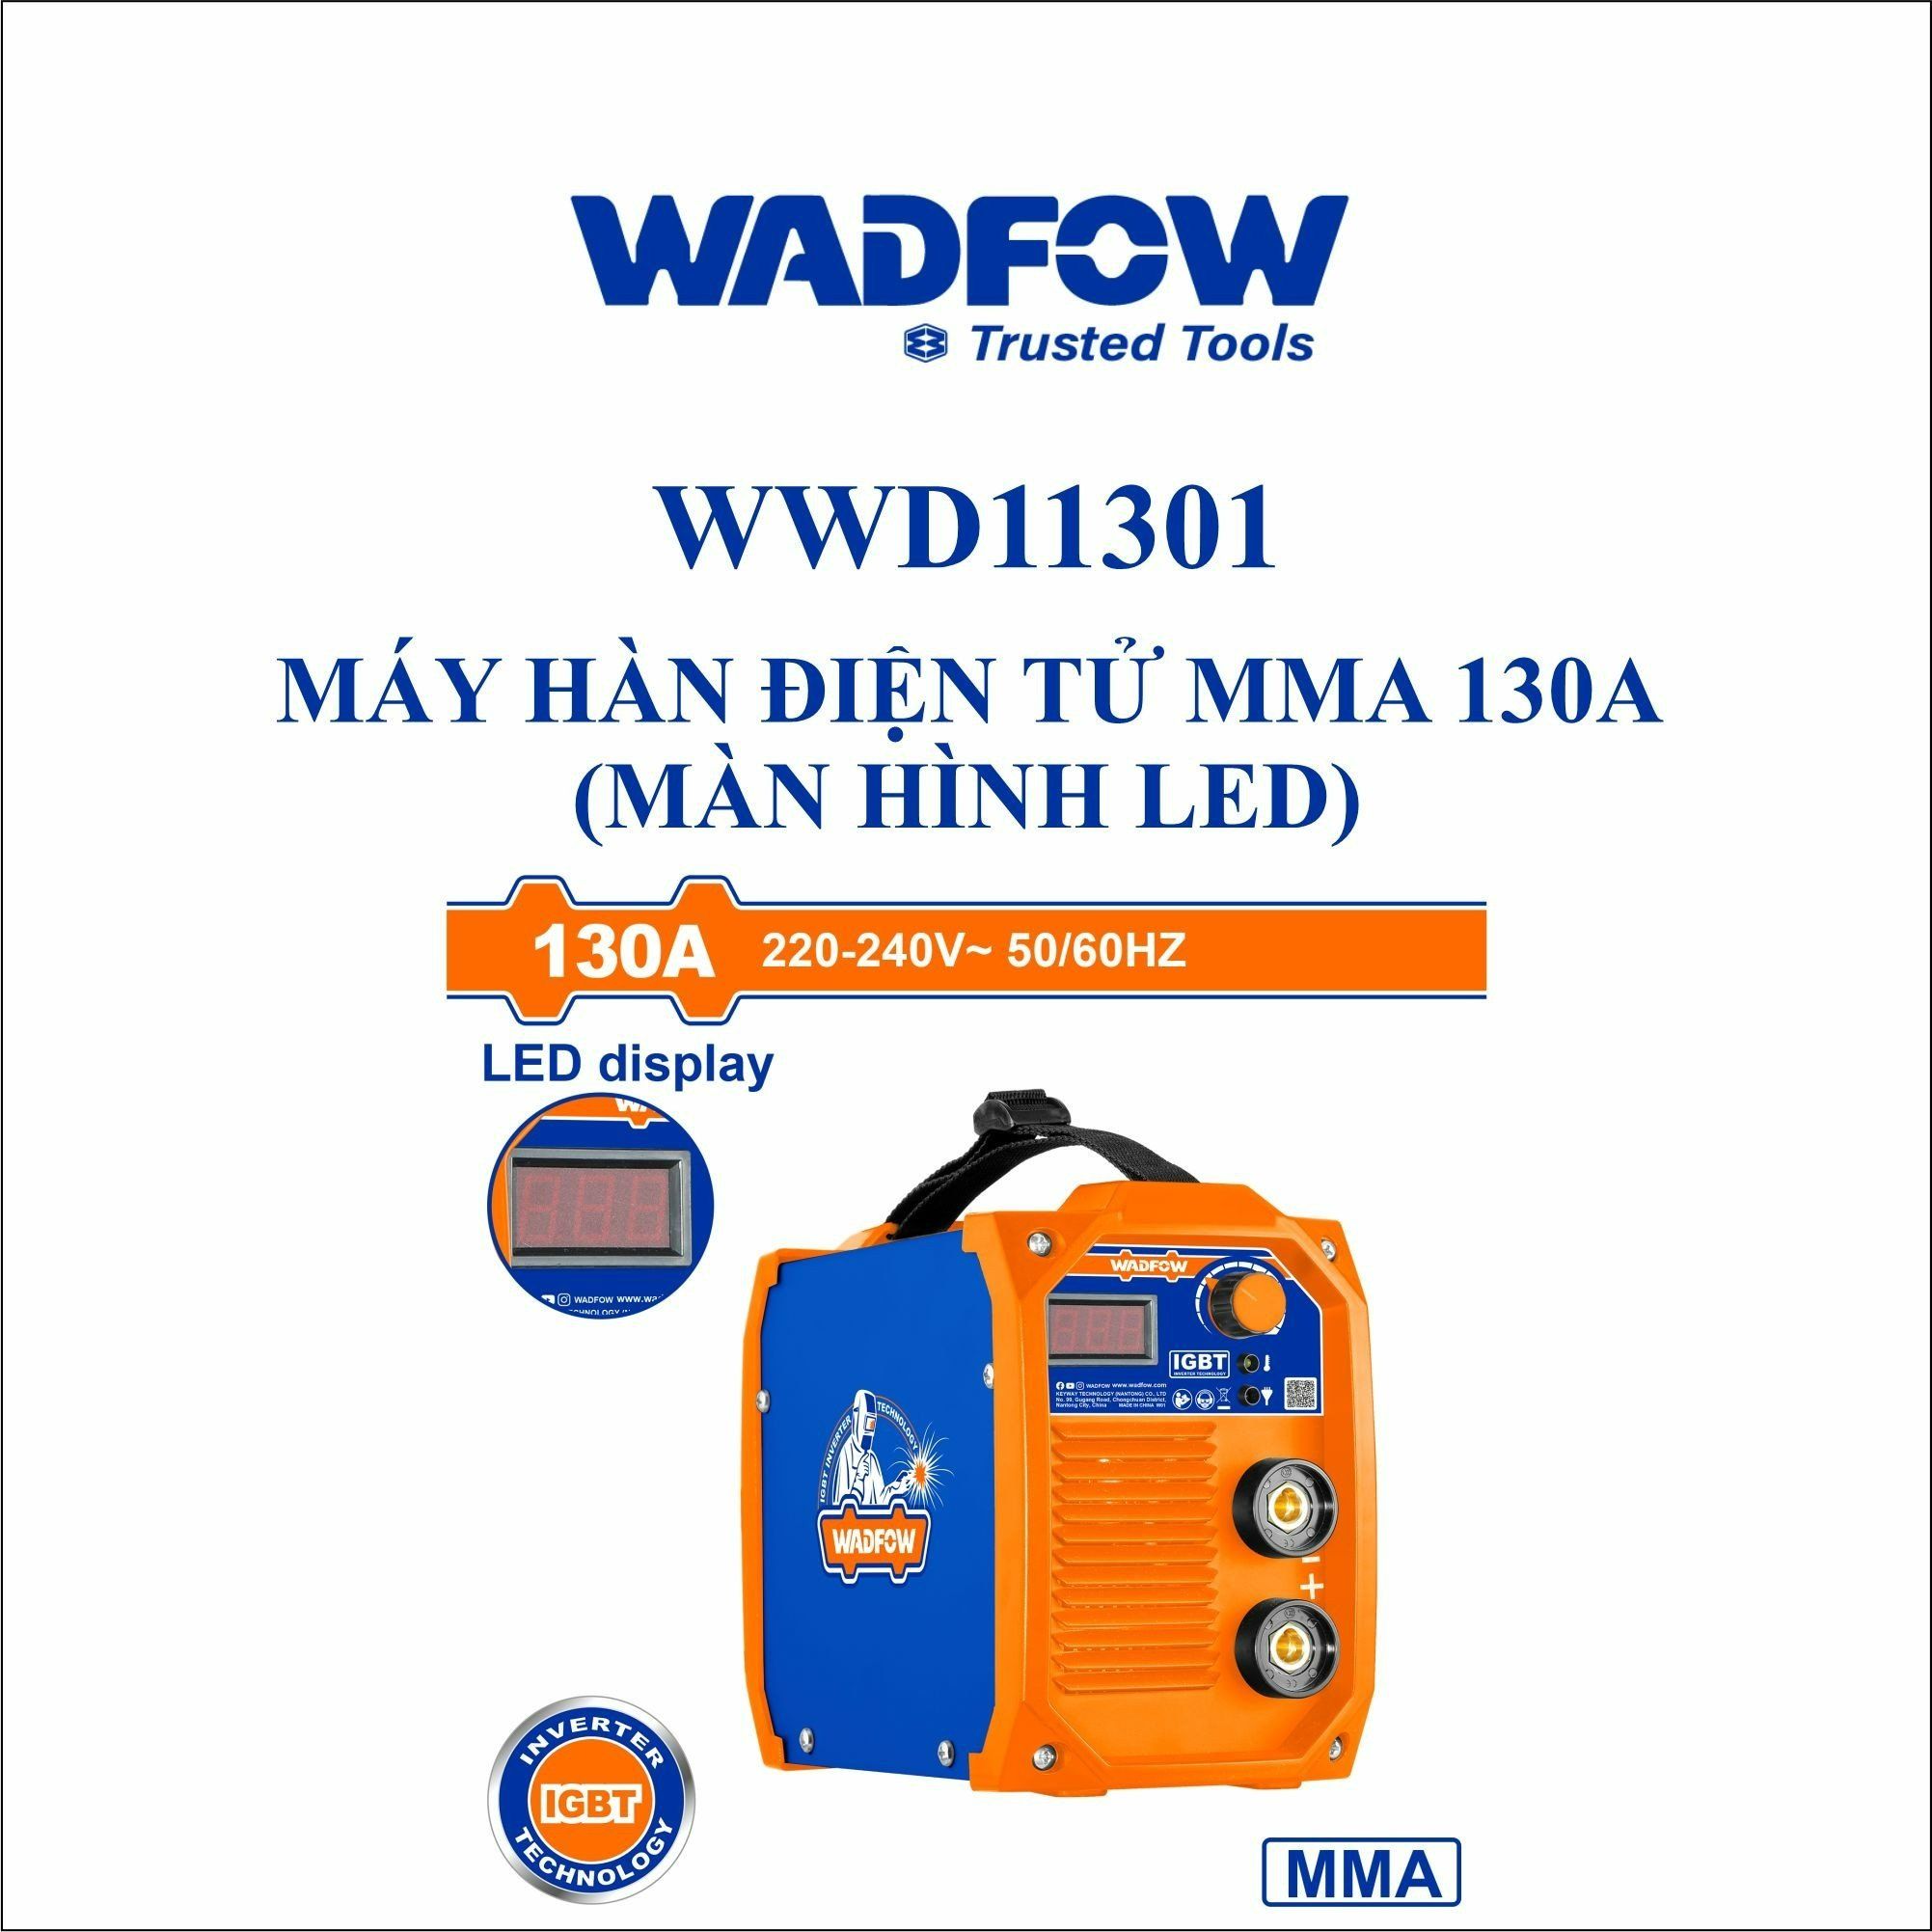  Máy hàn điện tử MMA 130A WADFOW WWD11301 